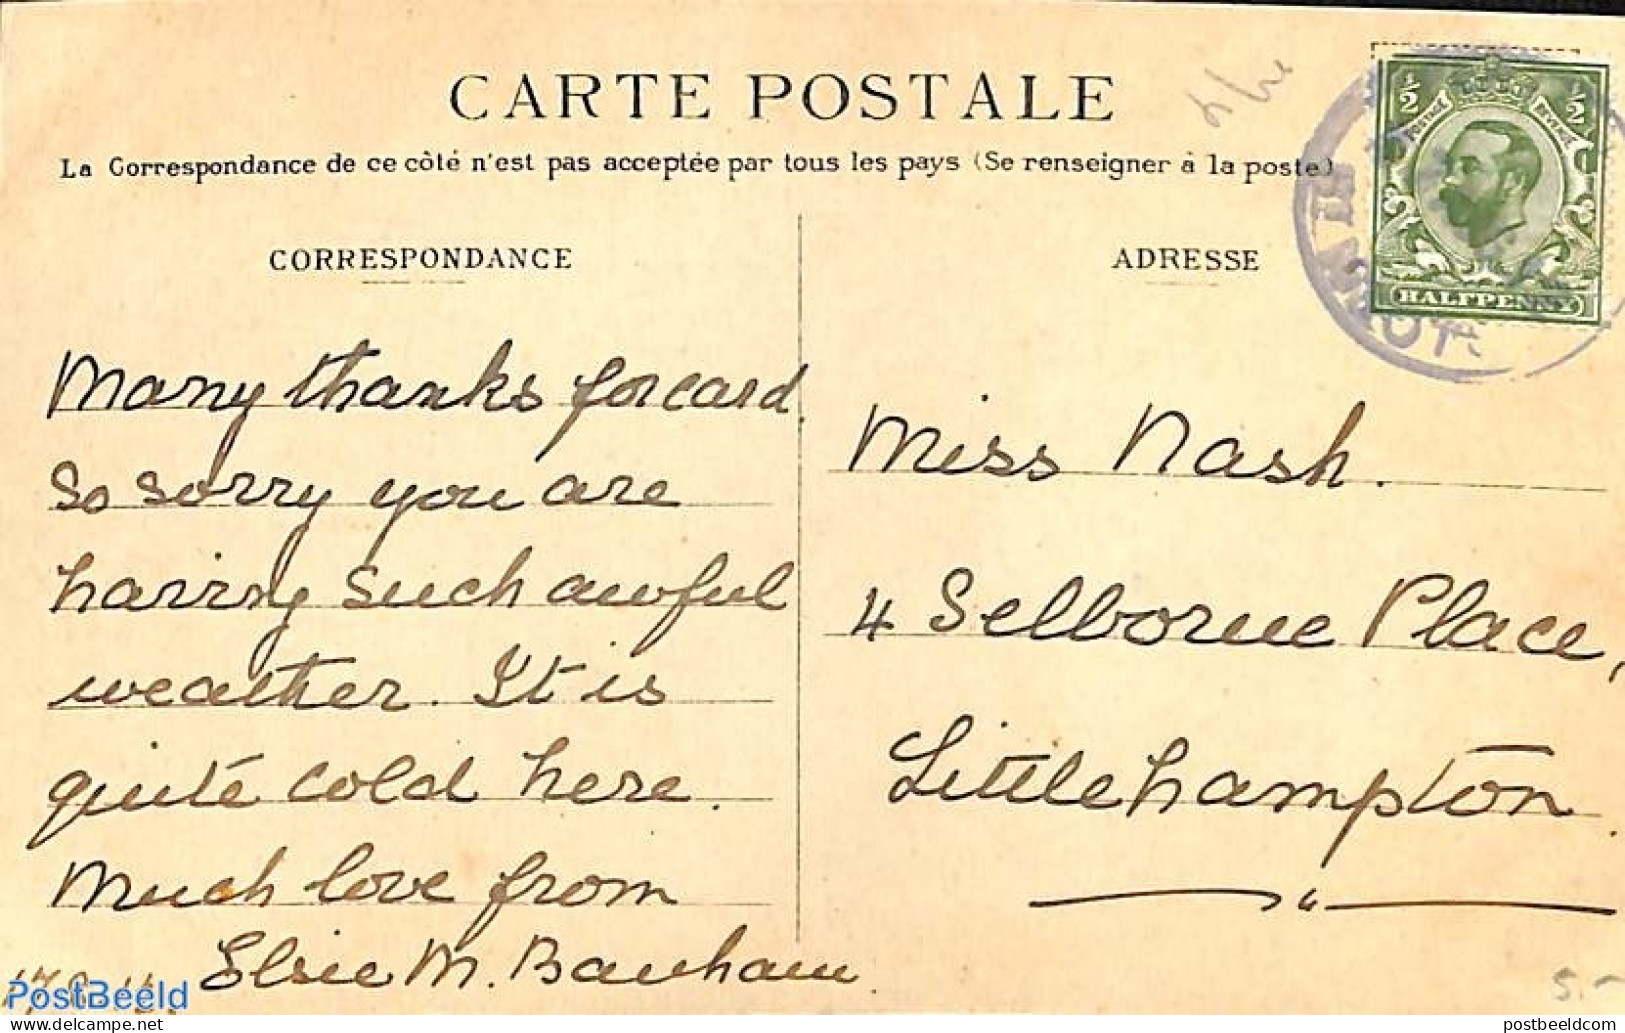 Great Britain 1912 Postcard To England. 'Femm'me Du Sud Algerien, Postal History - Storia Postale